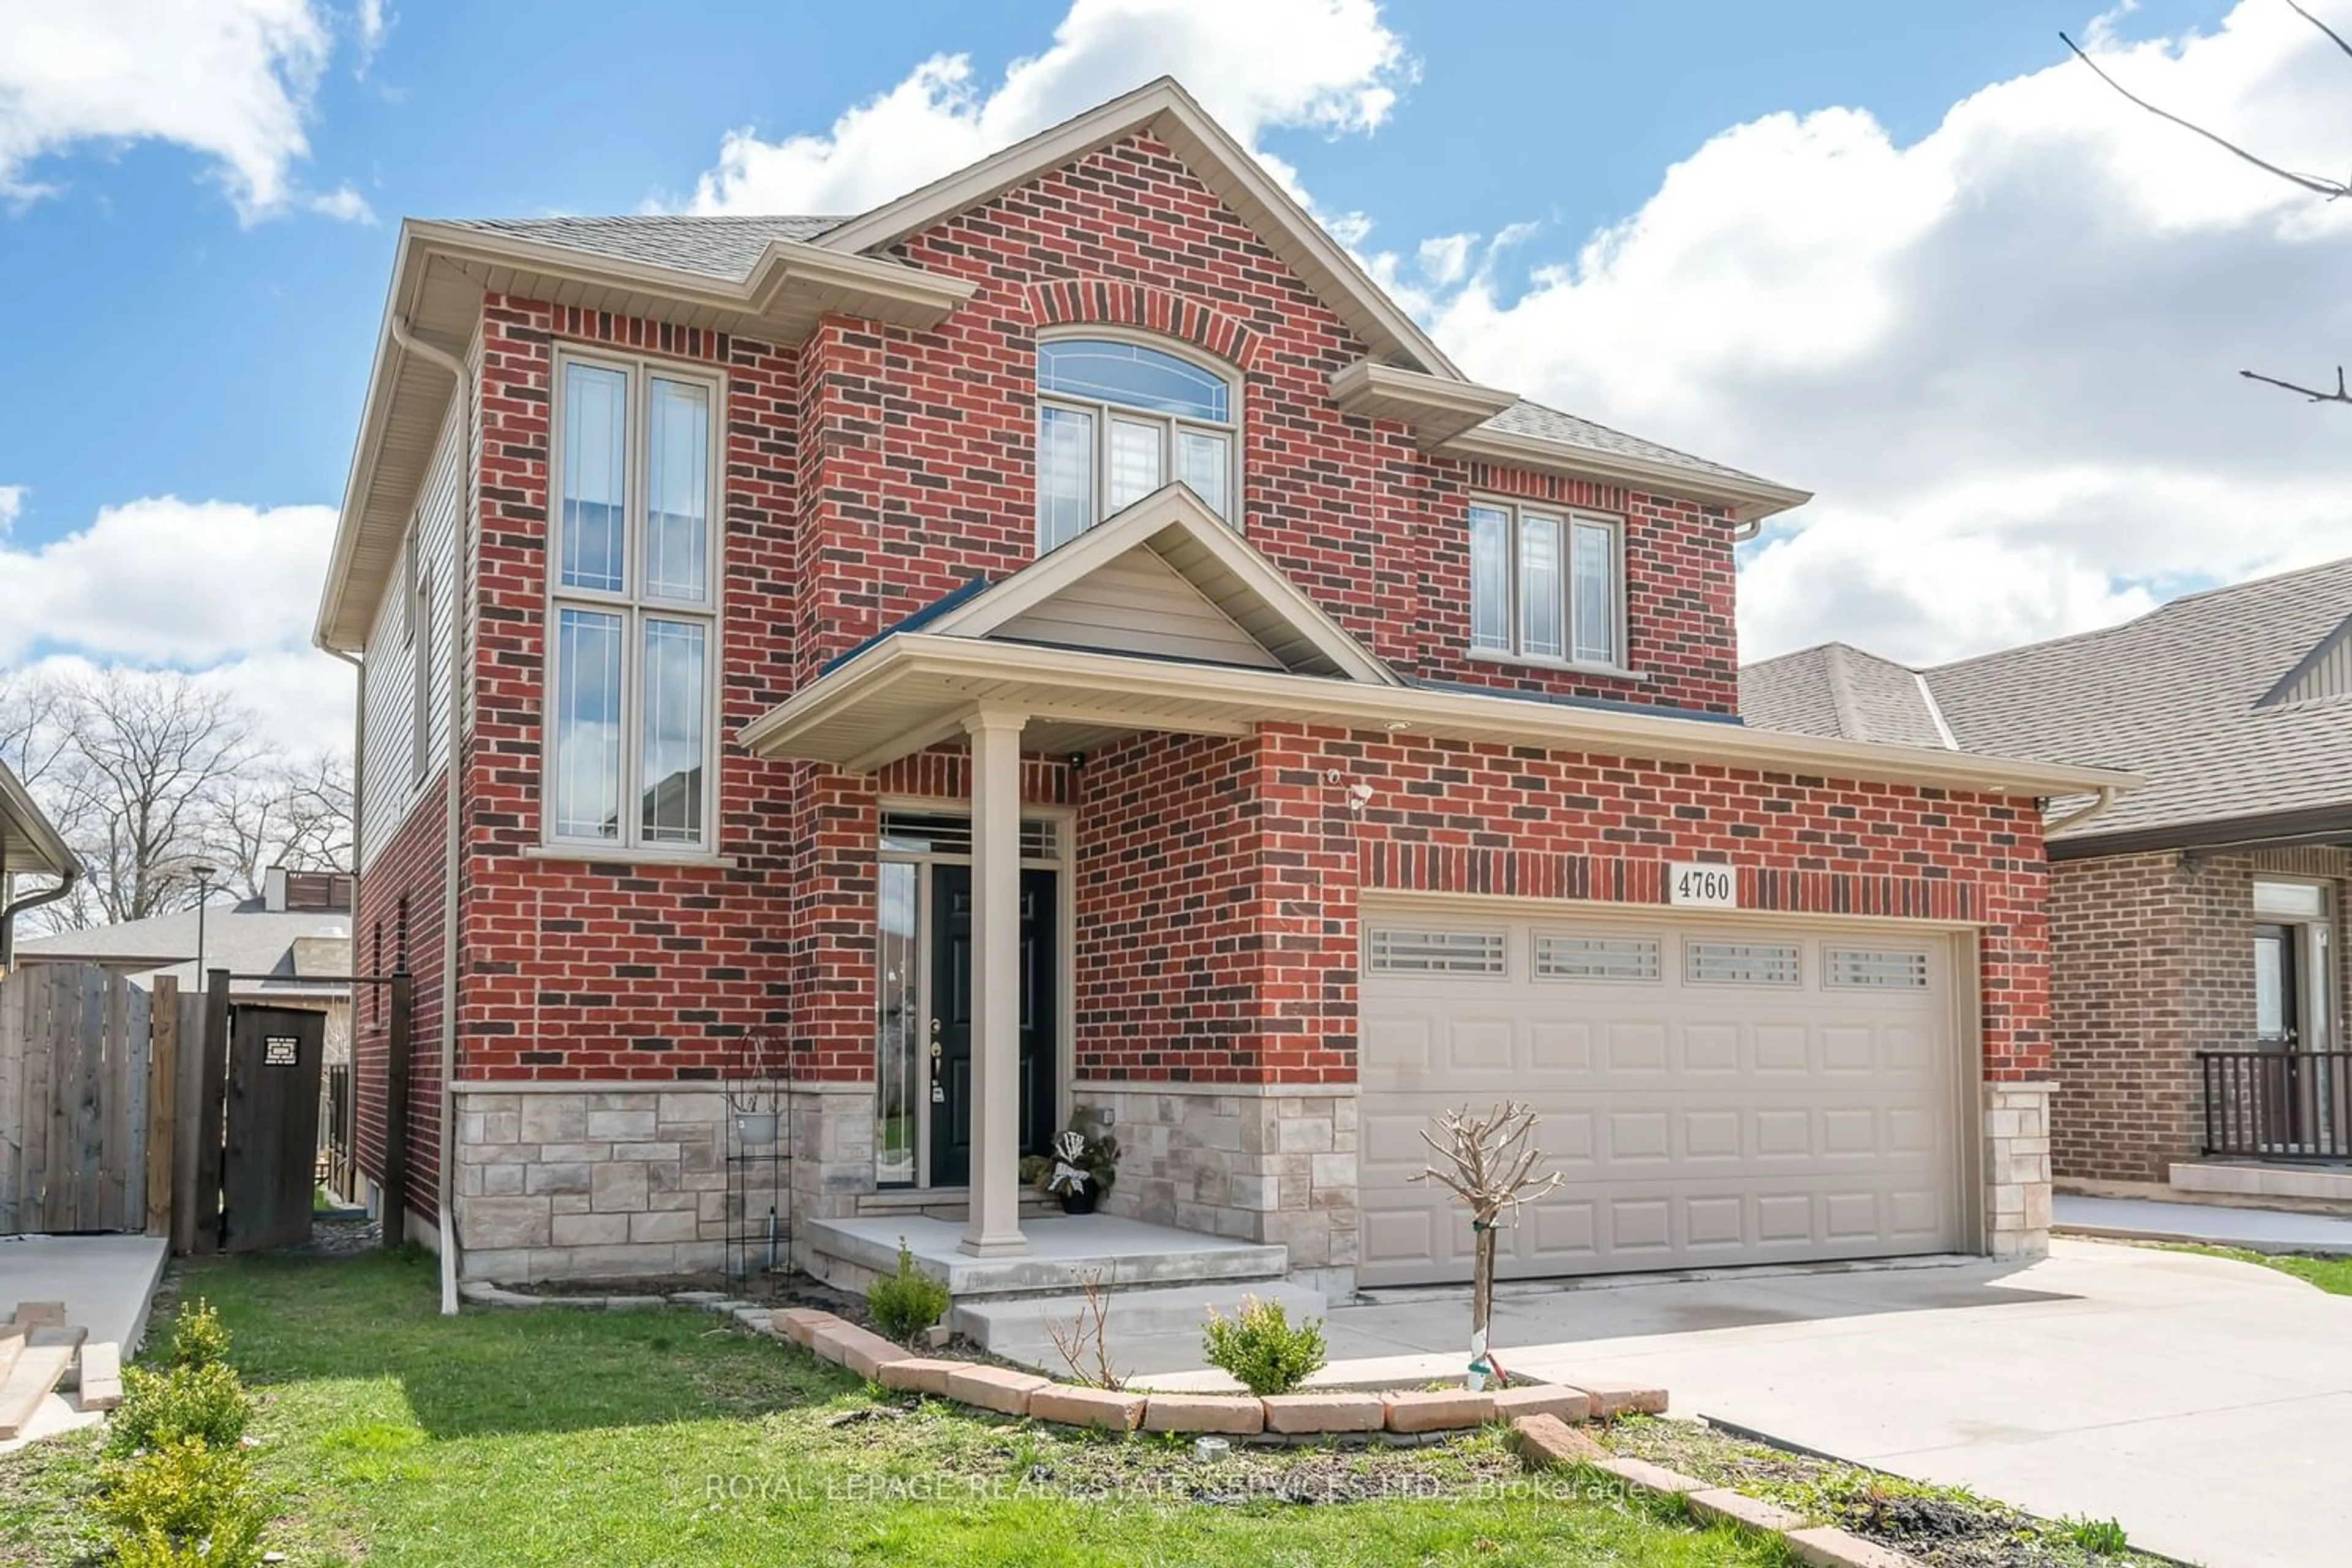 Home with brick exterior material for 4760 Victor Dr, Niagara Falls Ontario L2E 0B2